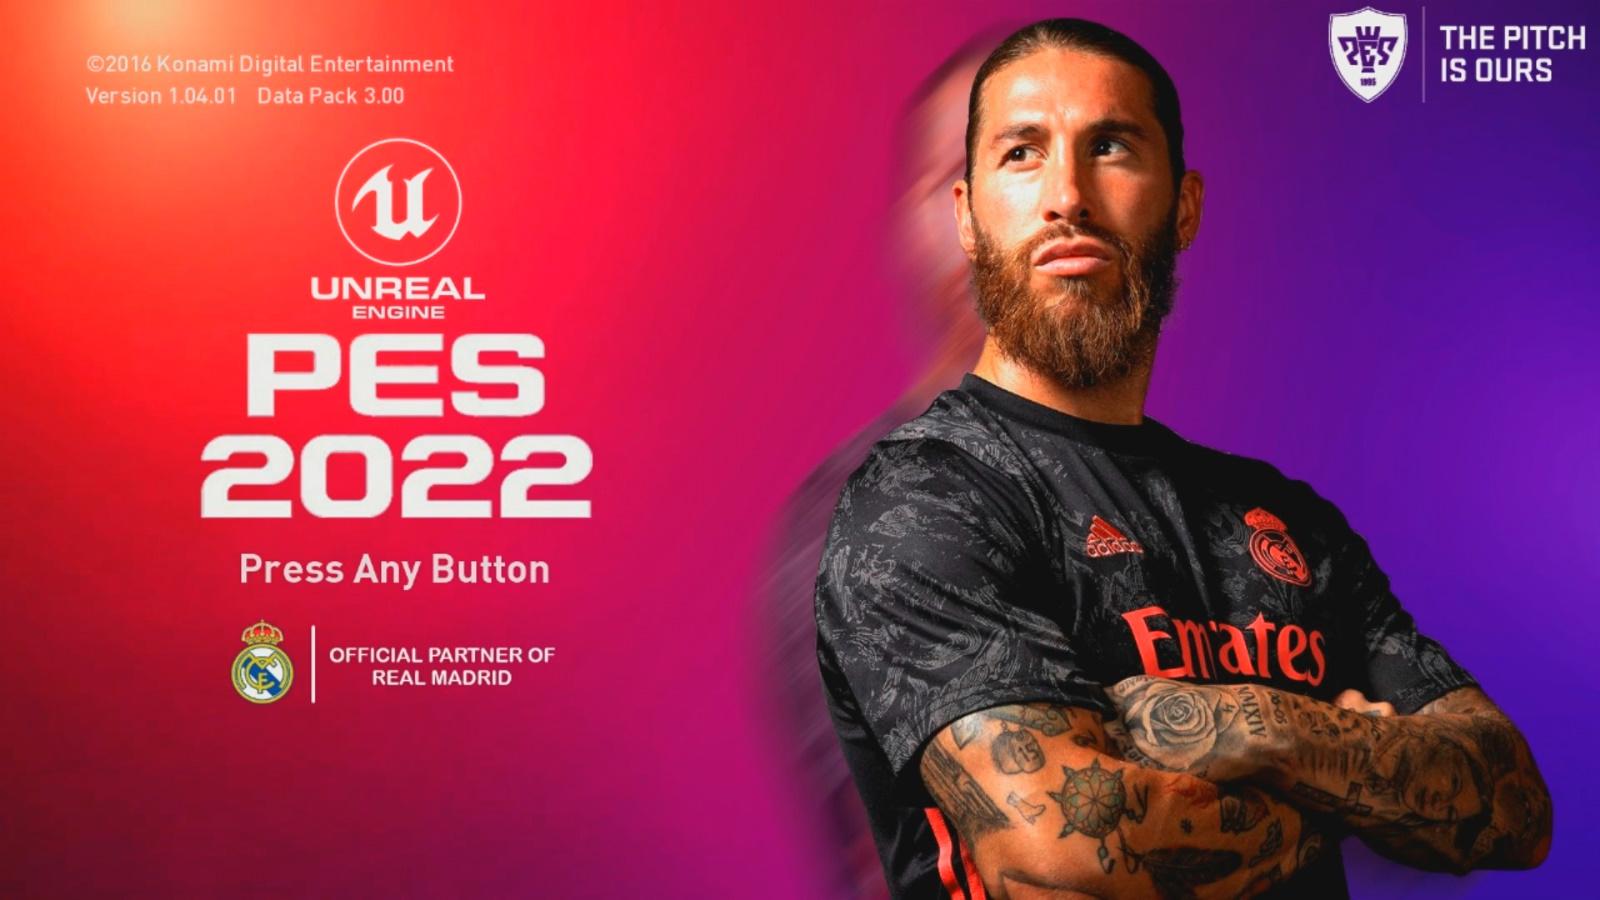 pro evolution soccer 2022 pc cover